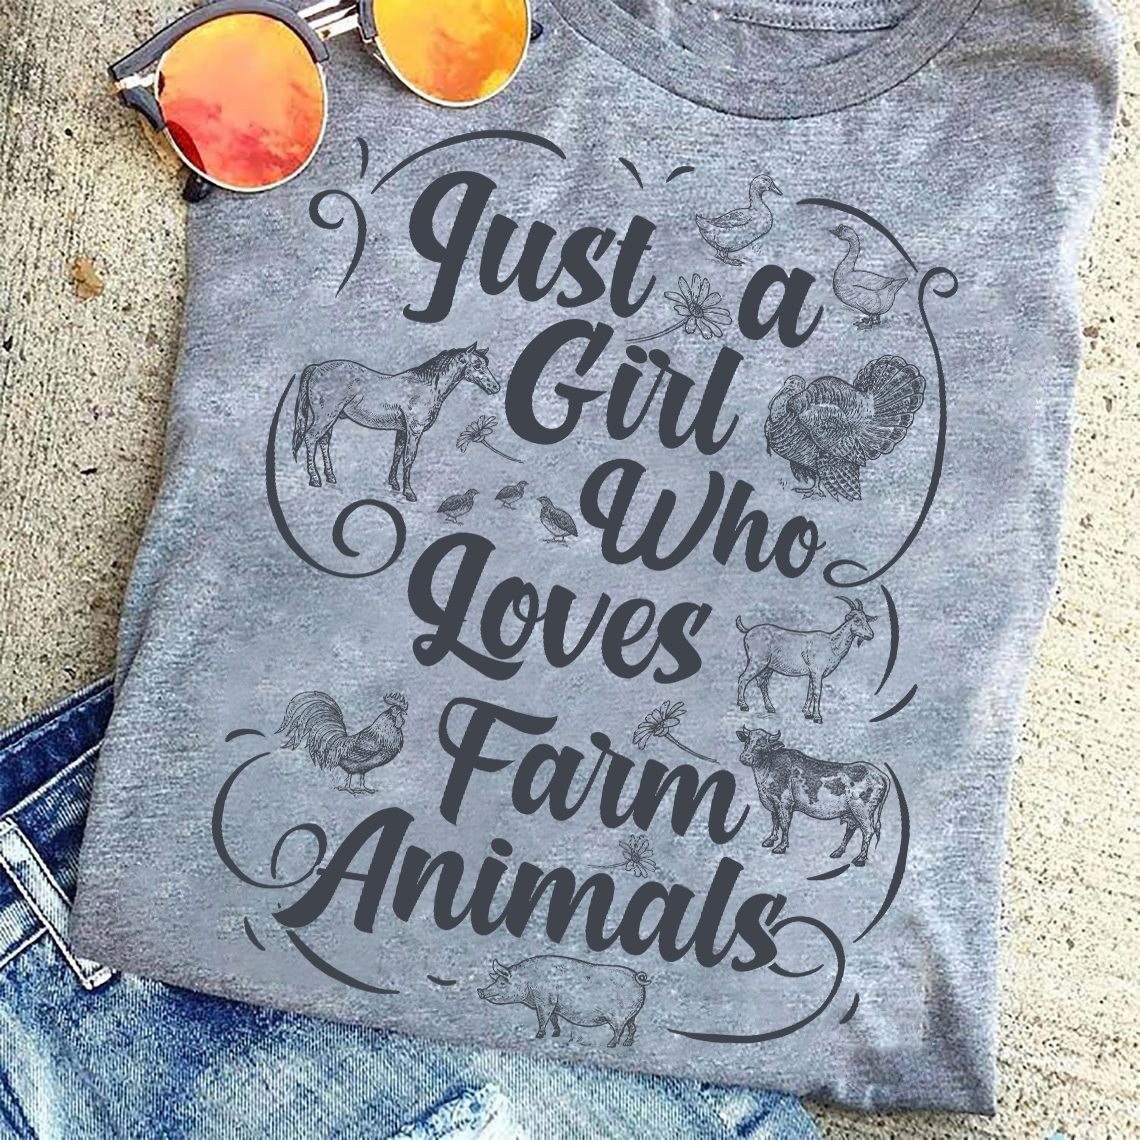 Just a girl who loves farm animals - Animal lover gift, girl the farmer